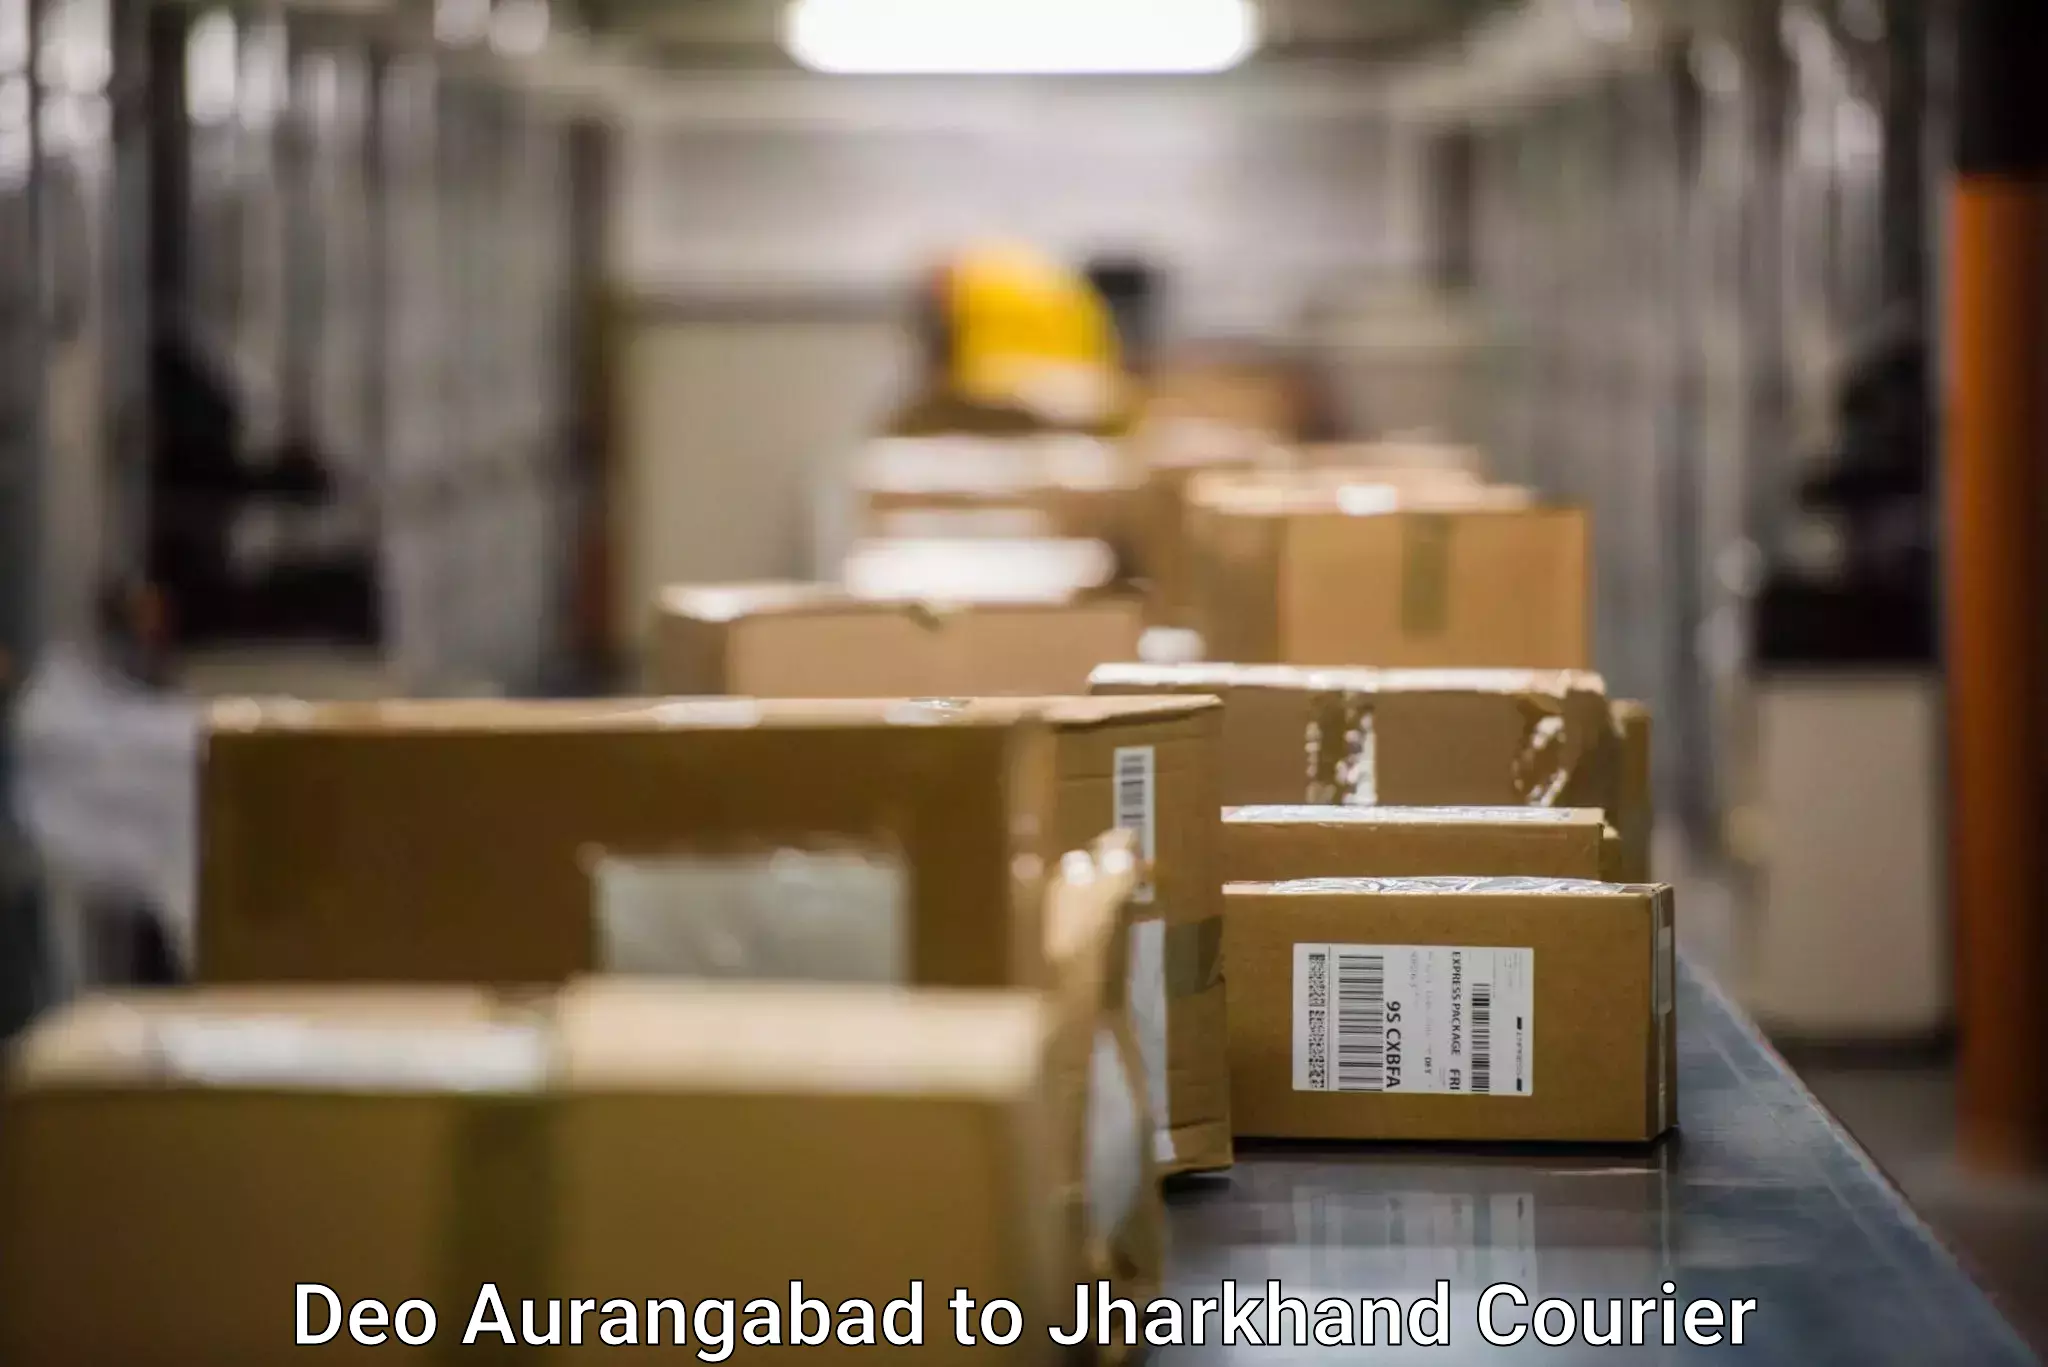 Efficient parcel service Deo Aurangabad to Lohardaga